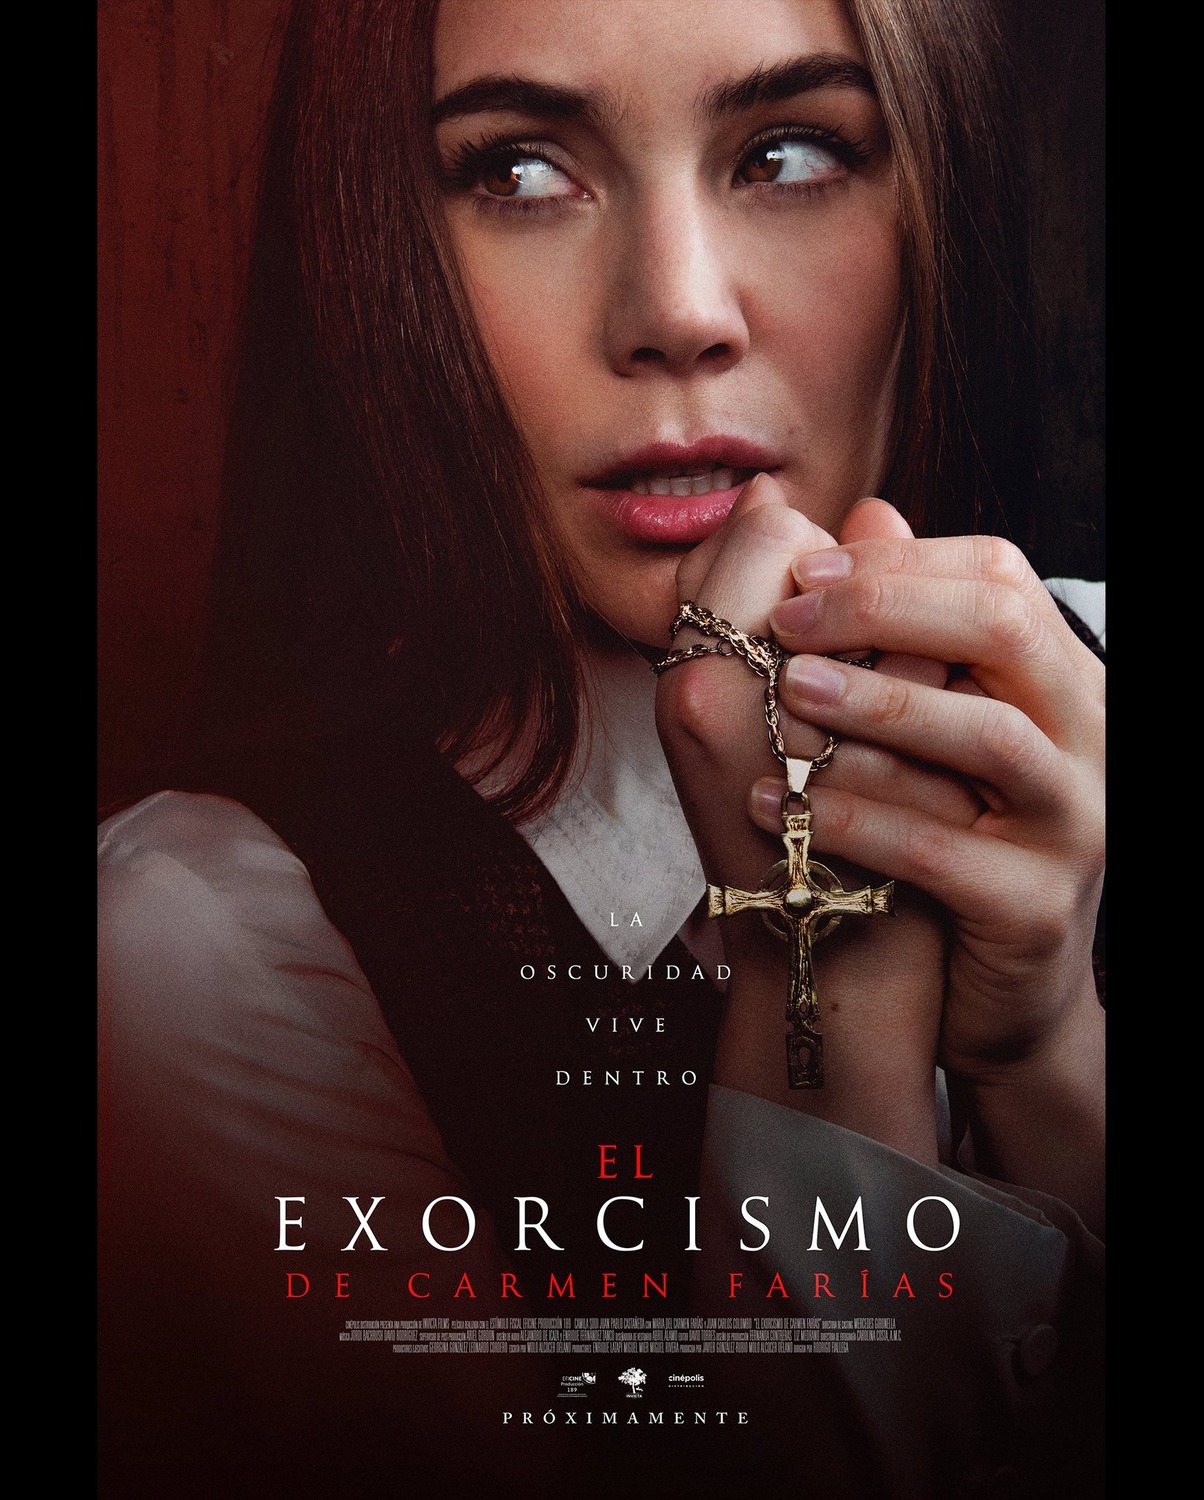 Extra Large Movie Poster Image for El exorcismo de Carmen Farías (#3 of 4)